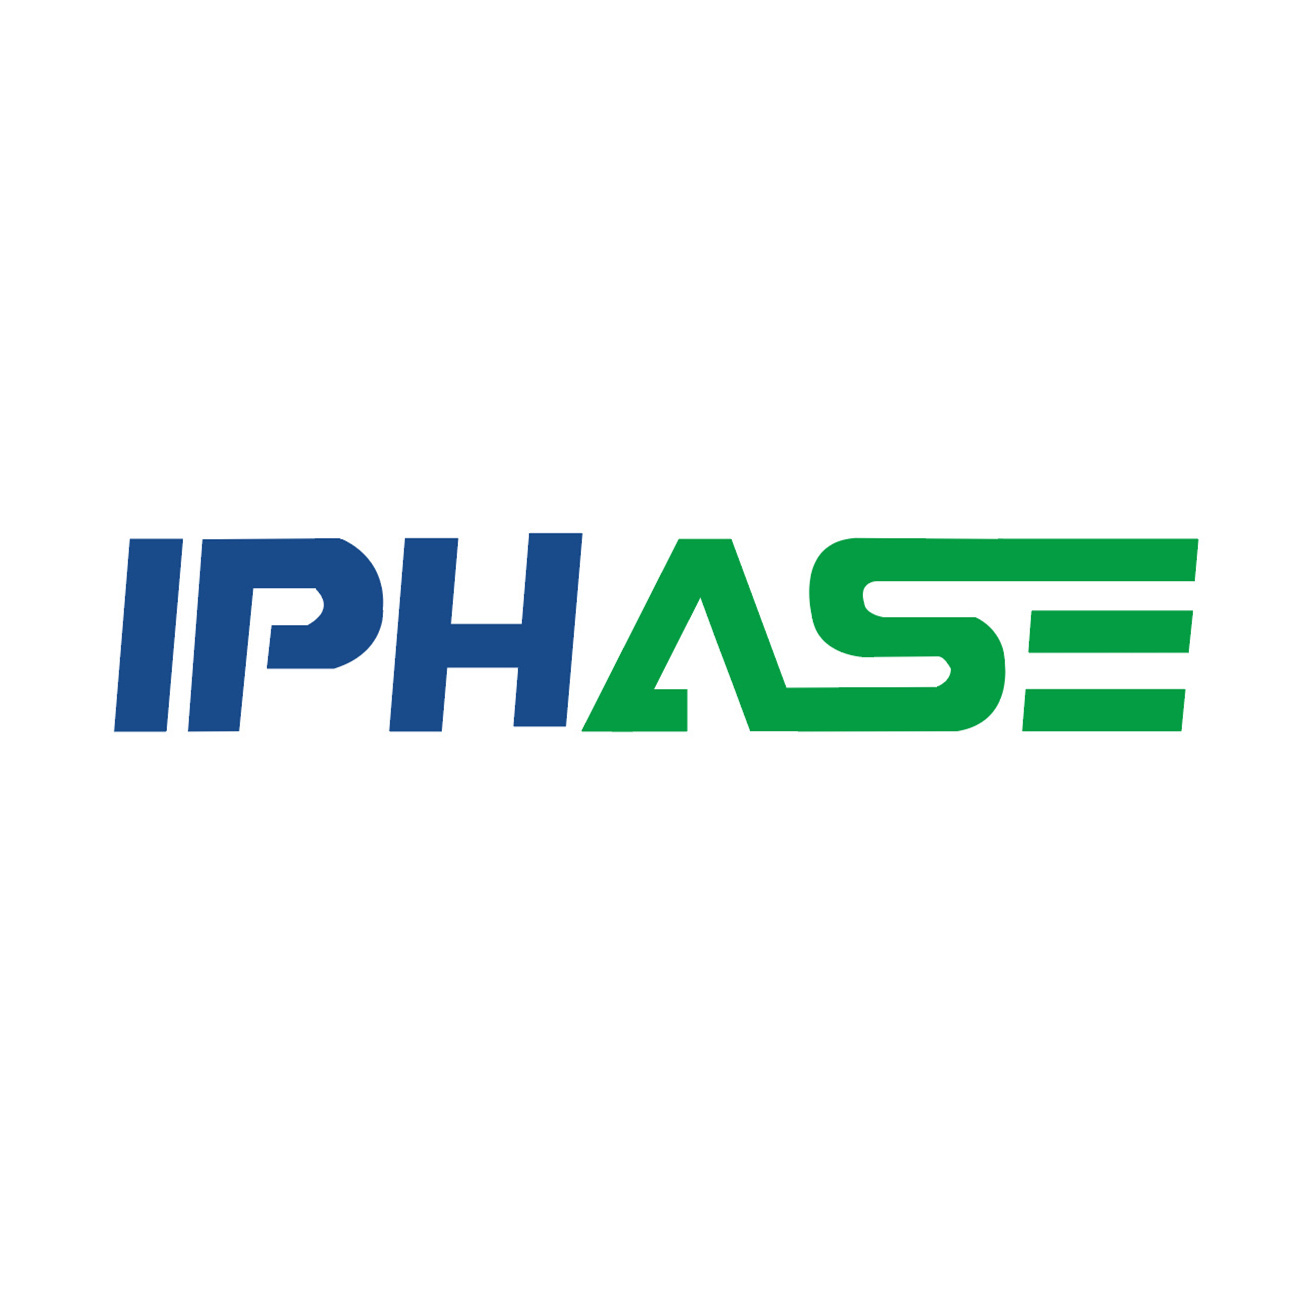 IPHASE/汇智和源 成功推出肝细胞共培养系统